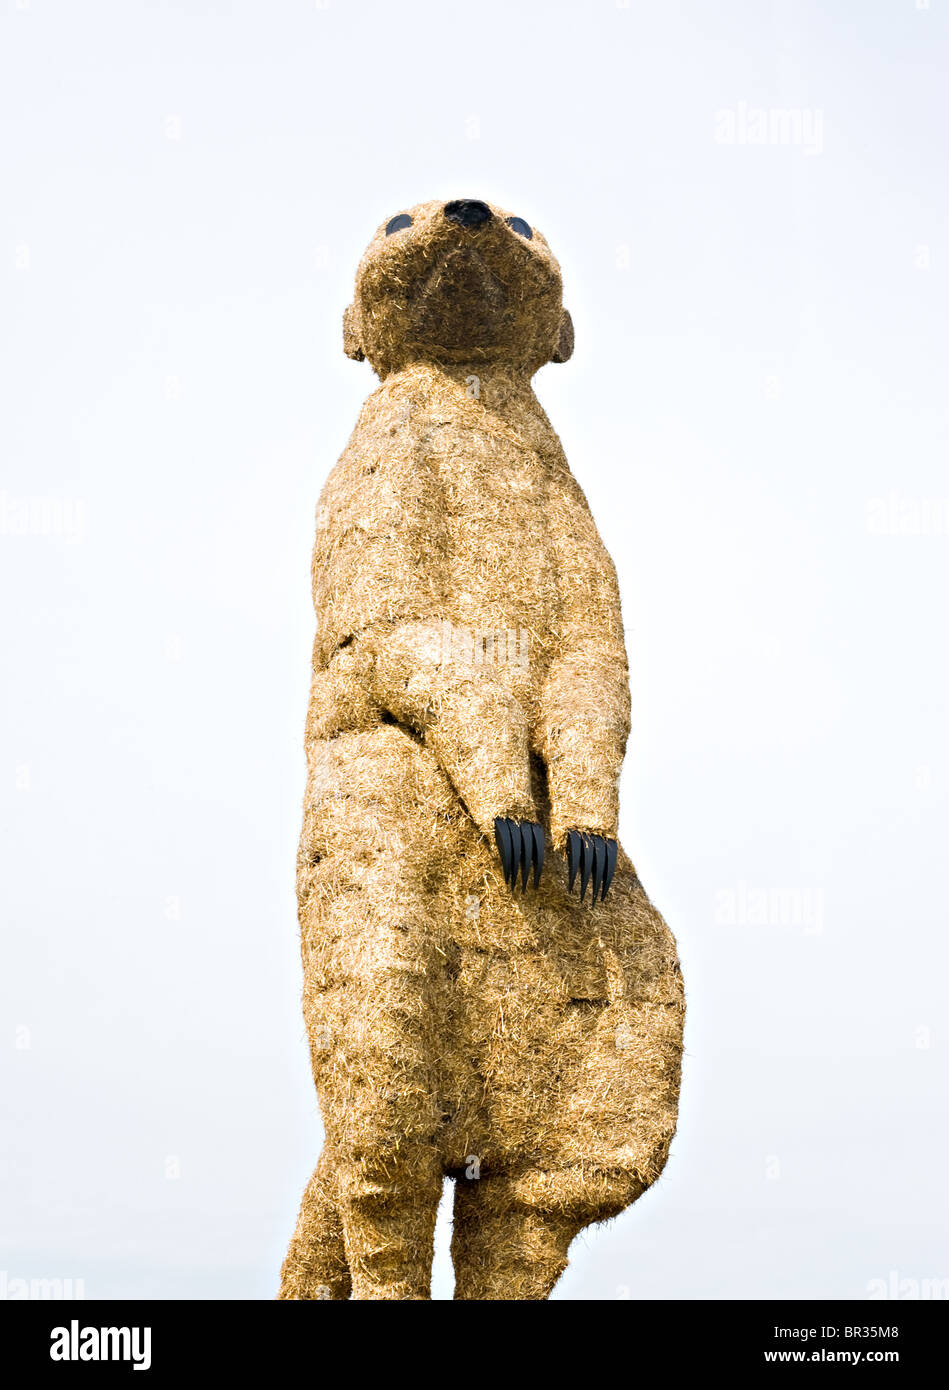 Statue of a Meerkat Sculpture at Snugburys Ice Cream Parlour near Nantwich Cheshire England United Kingdom UK Stock Photo